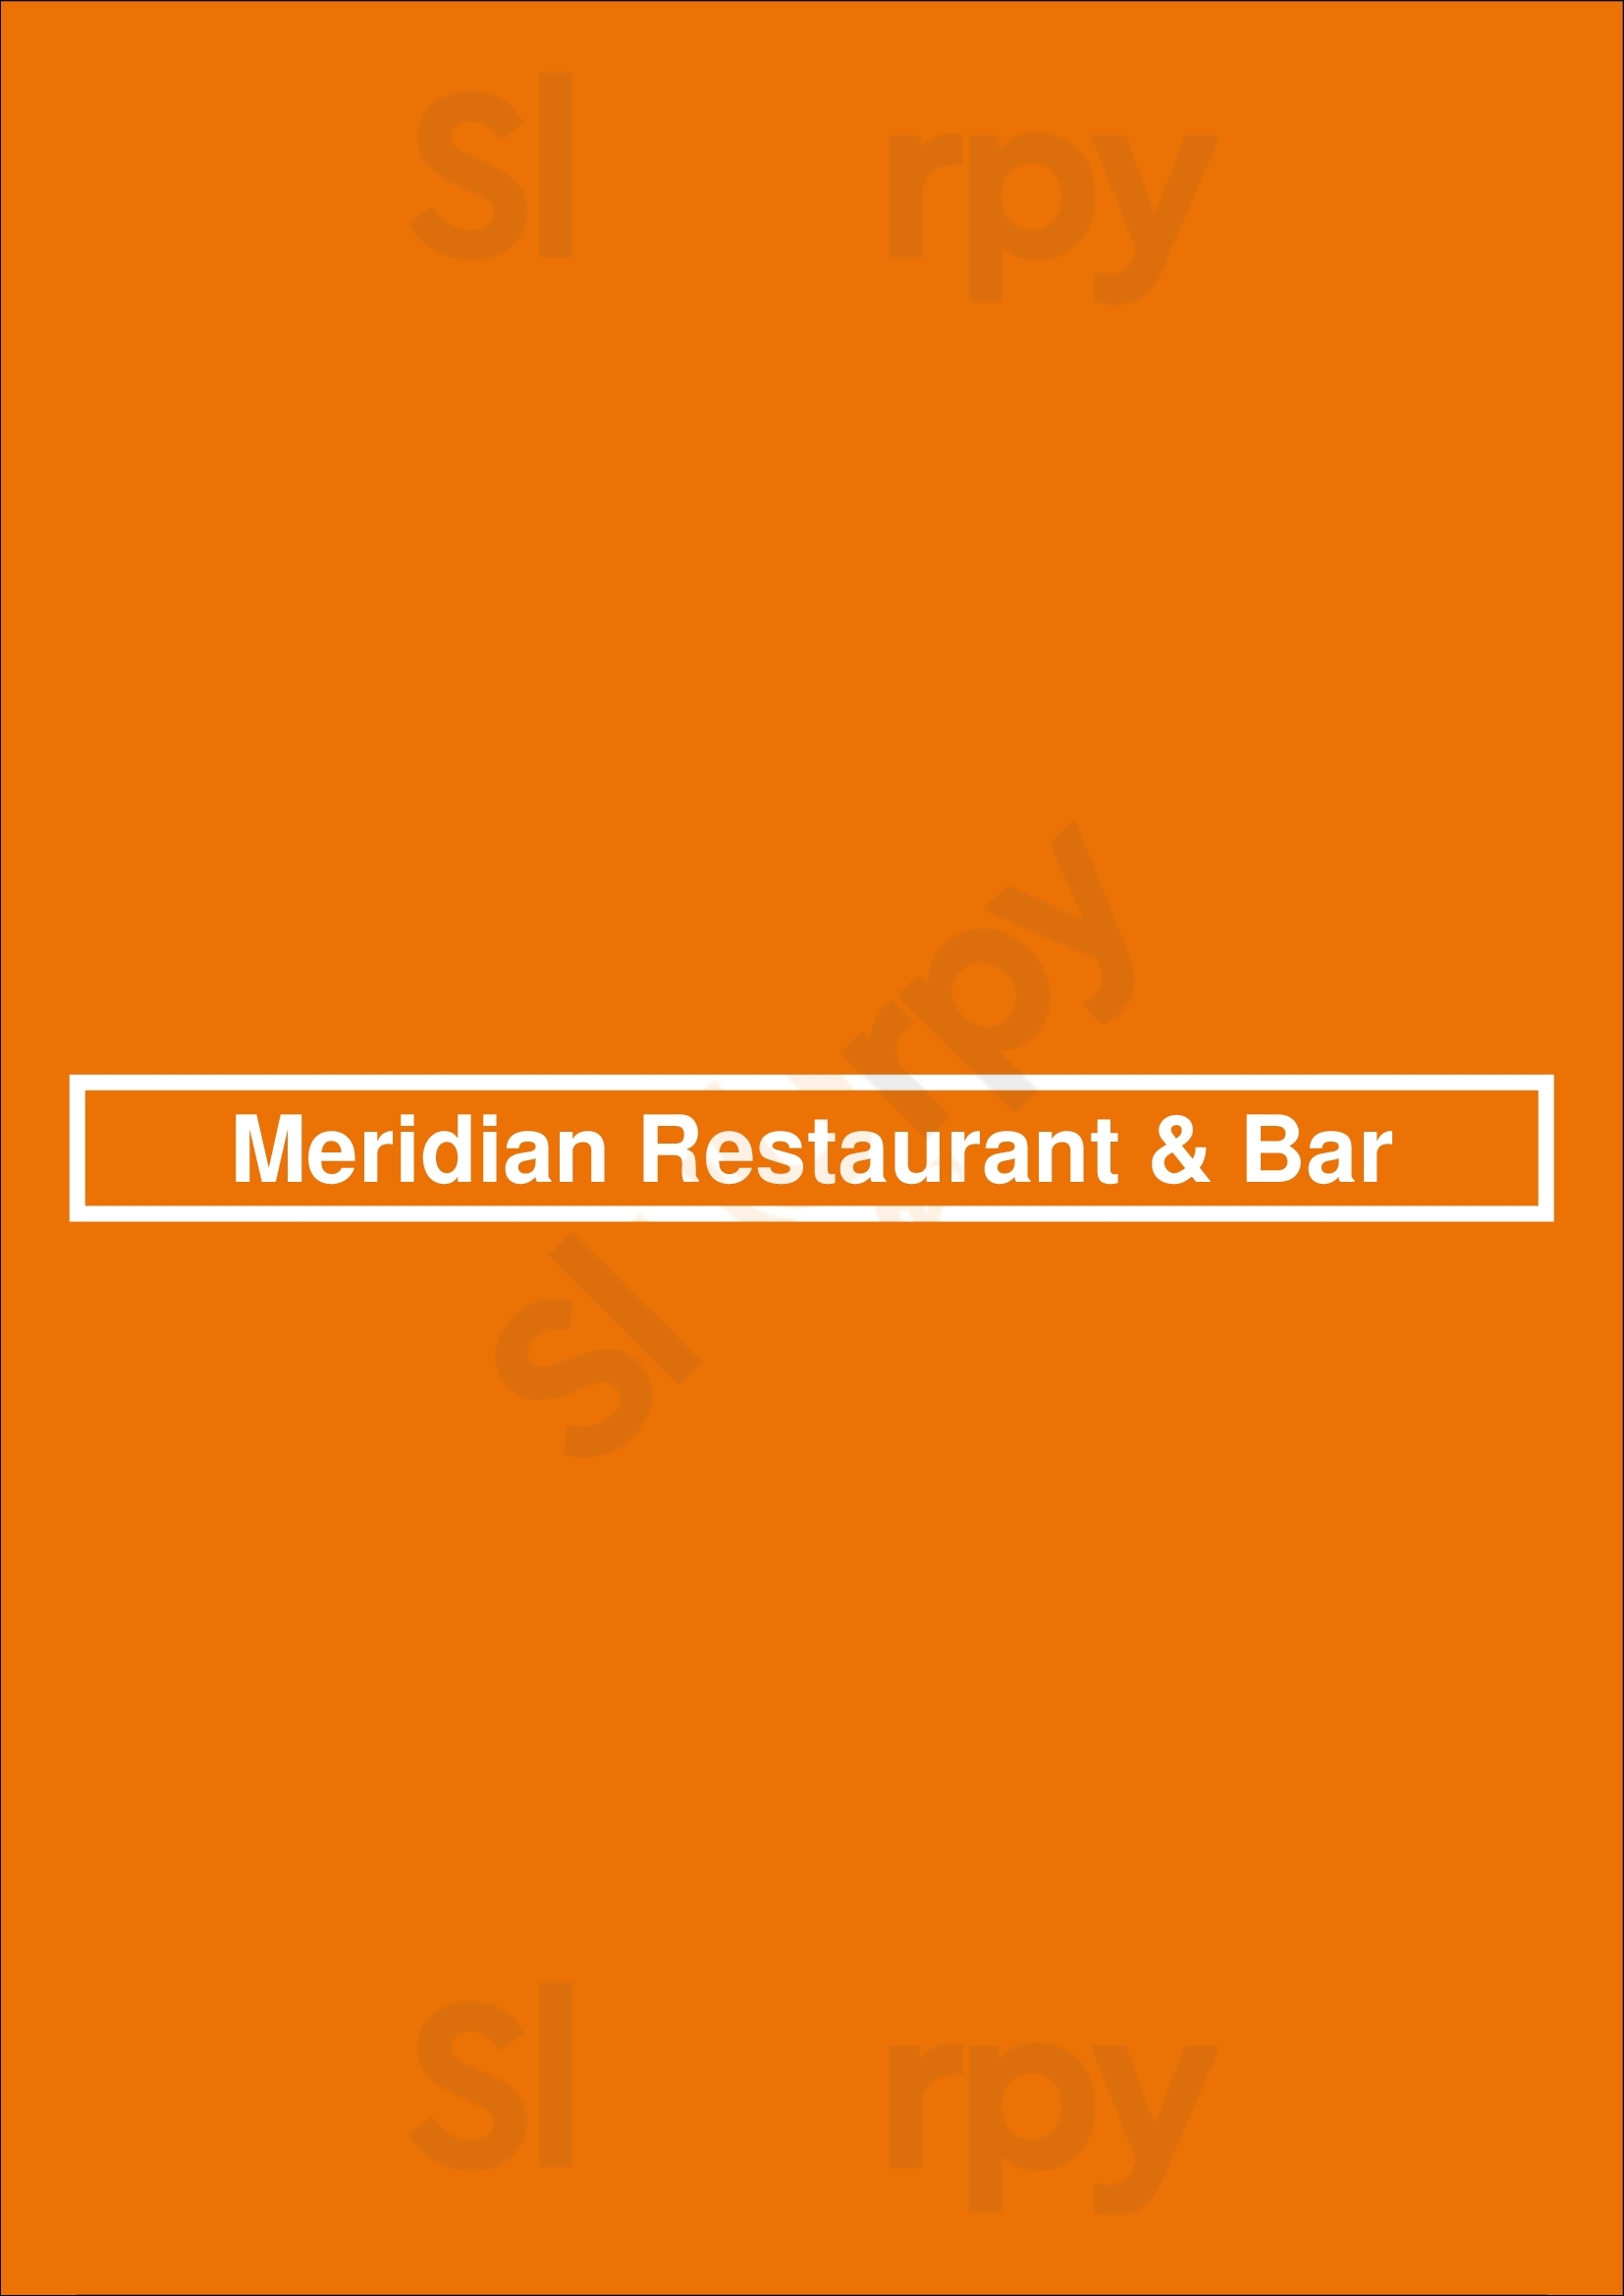 Meridian Restaurant & Bar Indianapolis Menu - 1